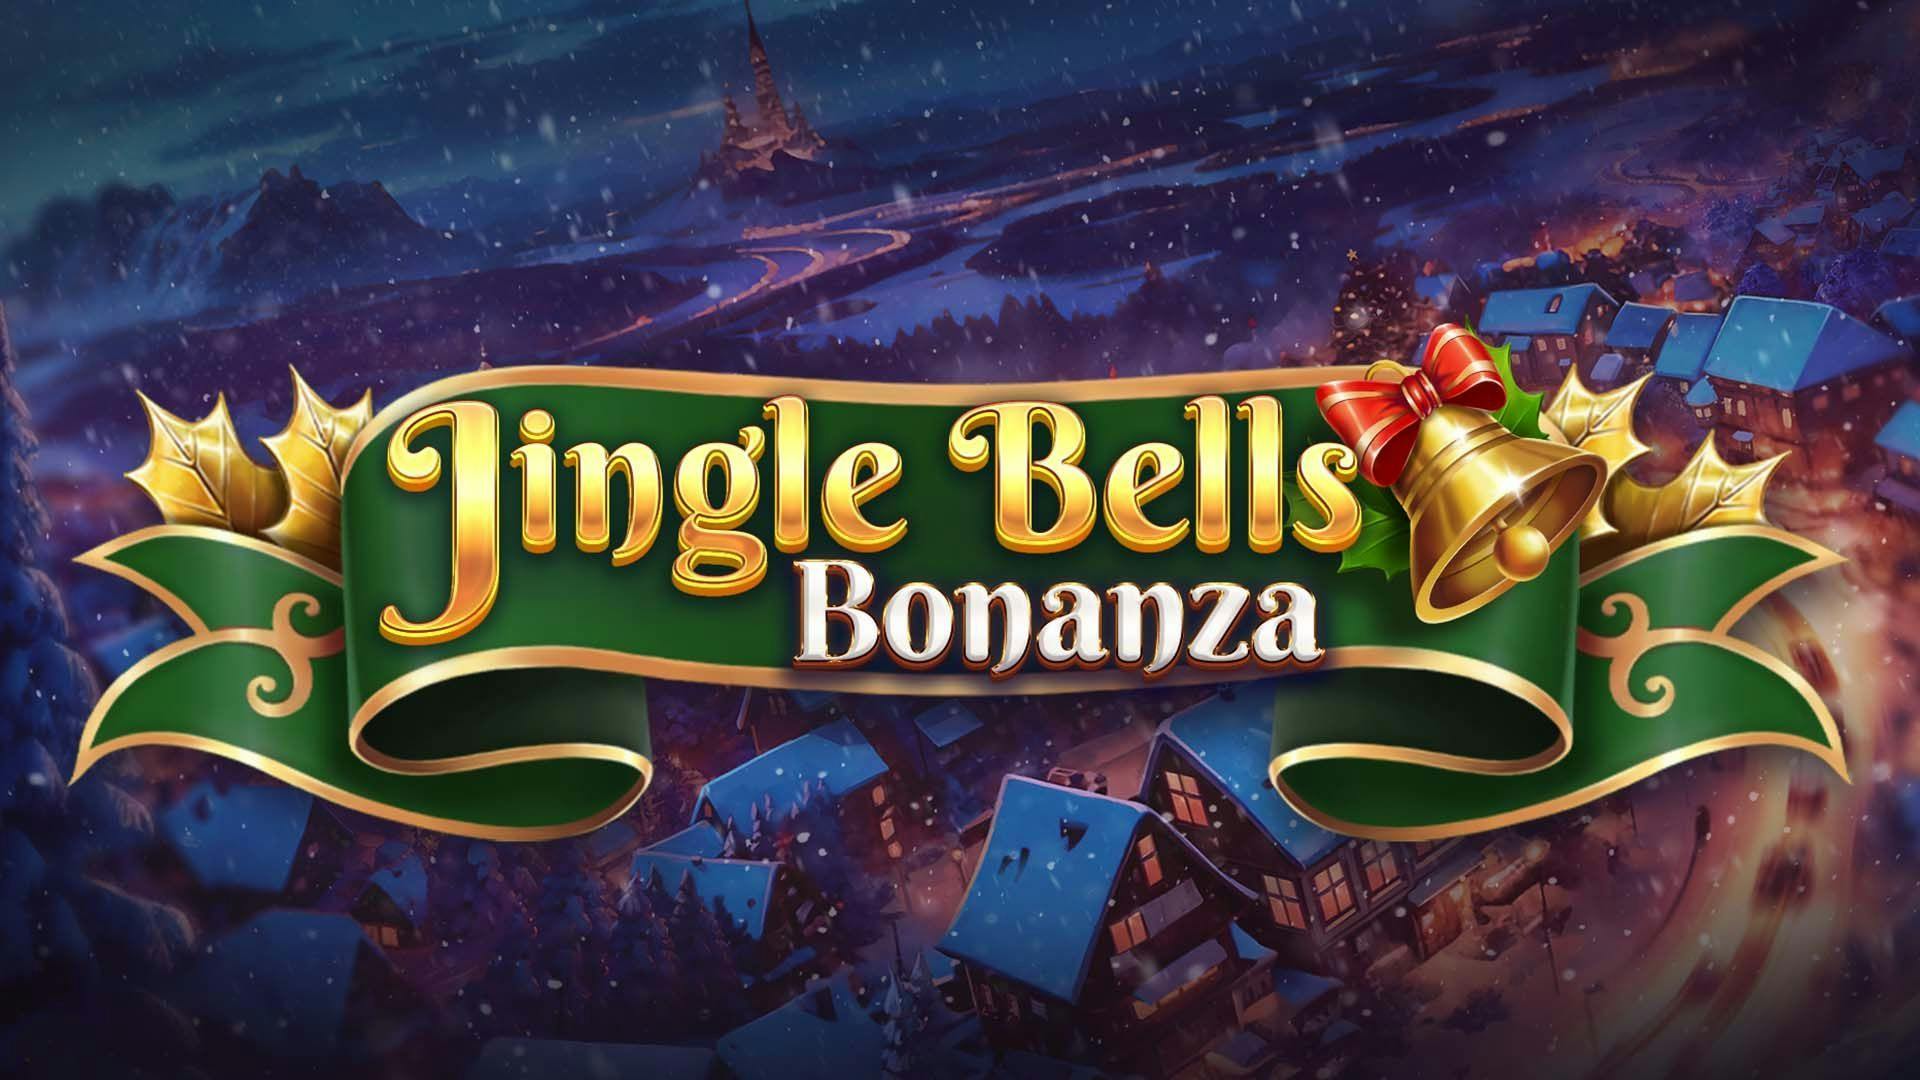 Jingle Bells Bonanza Slot Machine Online Free Game Play